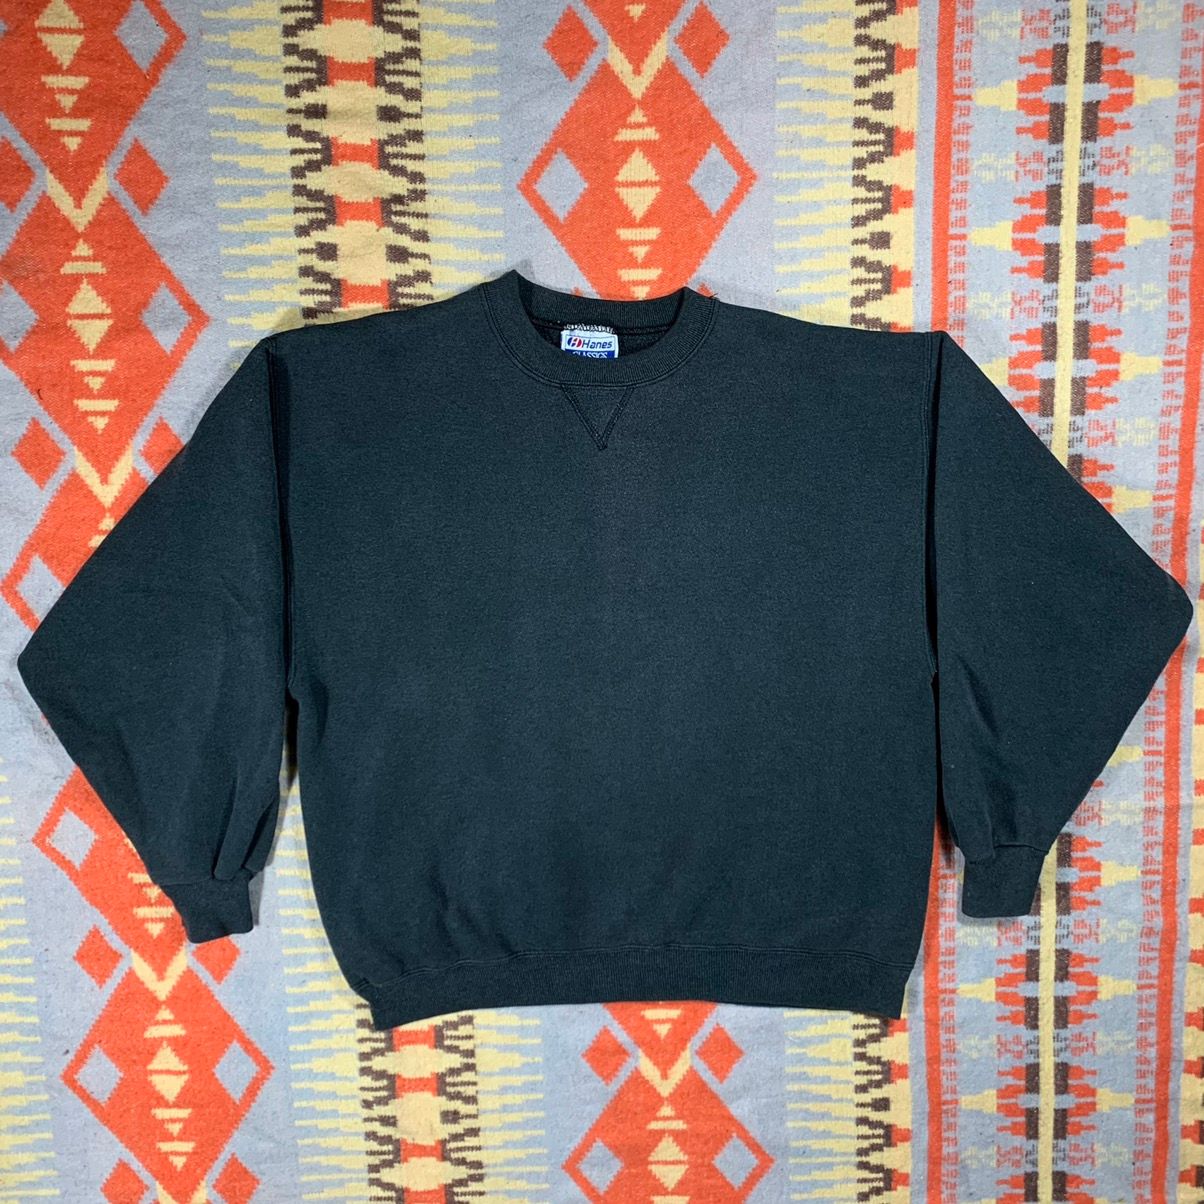 Vintage Vintage 1990’s Hanes Blank Sweatshirt Sun Faded Black Size US XL / EU 56 / 4 - 1 Preview